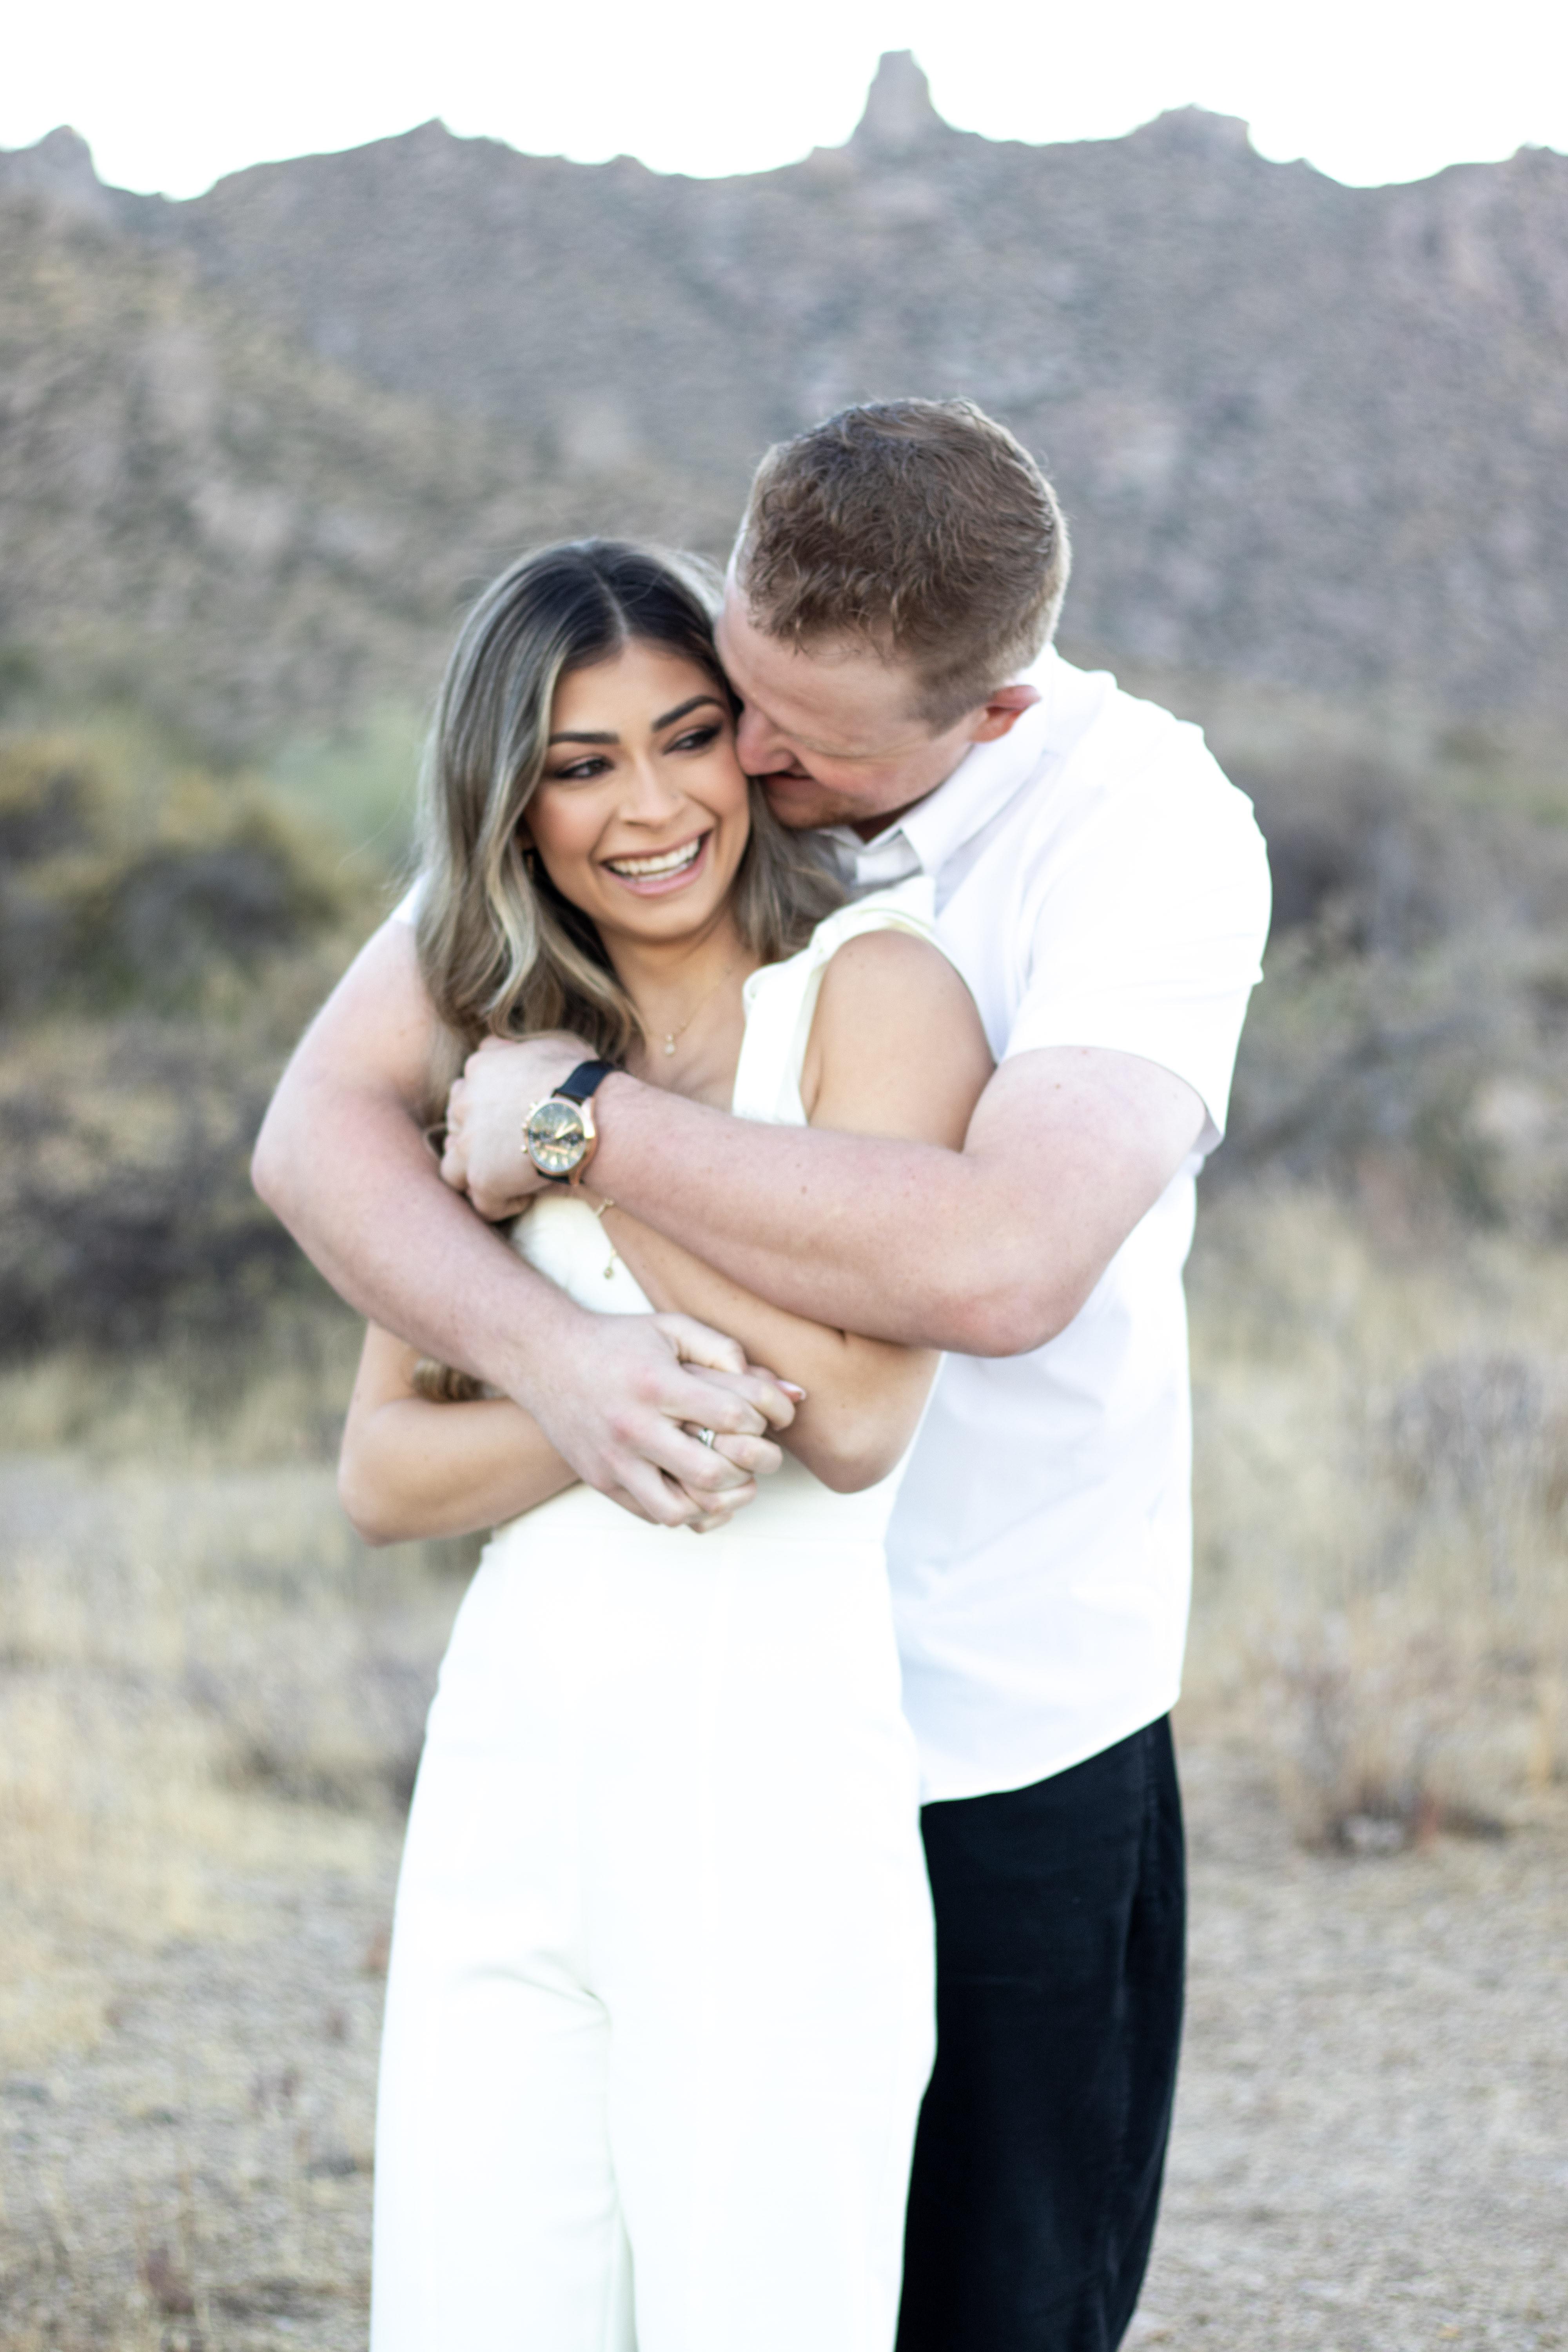 The Wedding Website of Sharidan Morales and Logan Webb